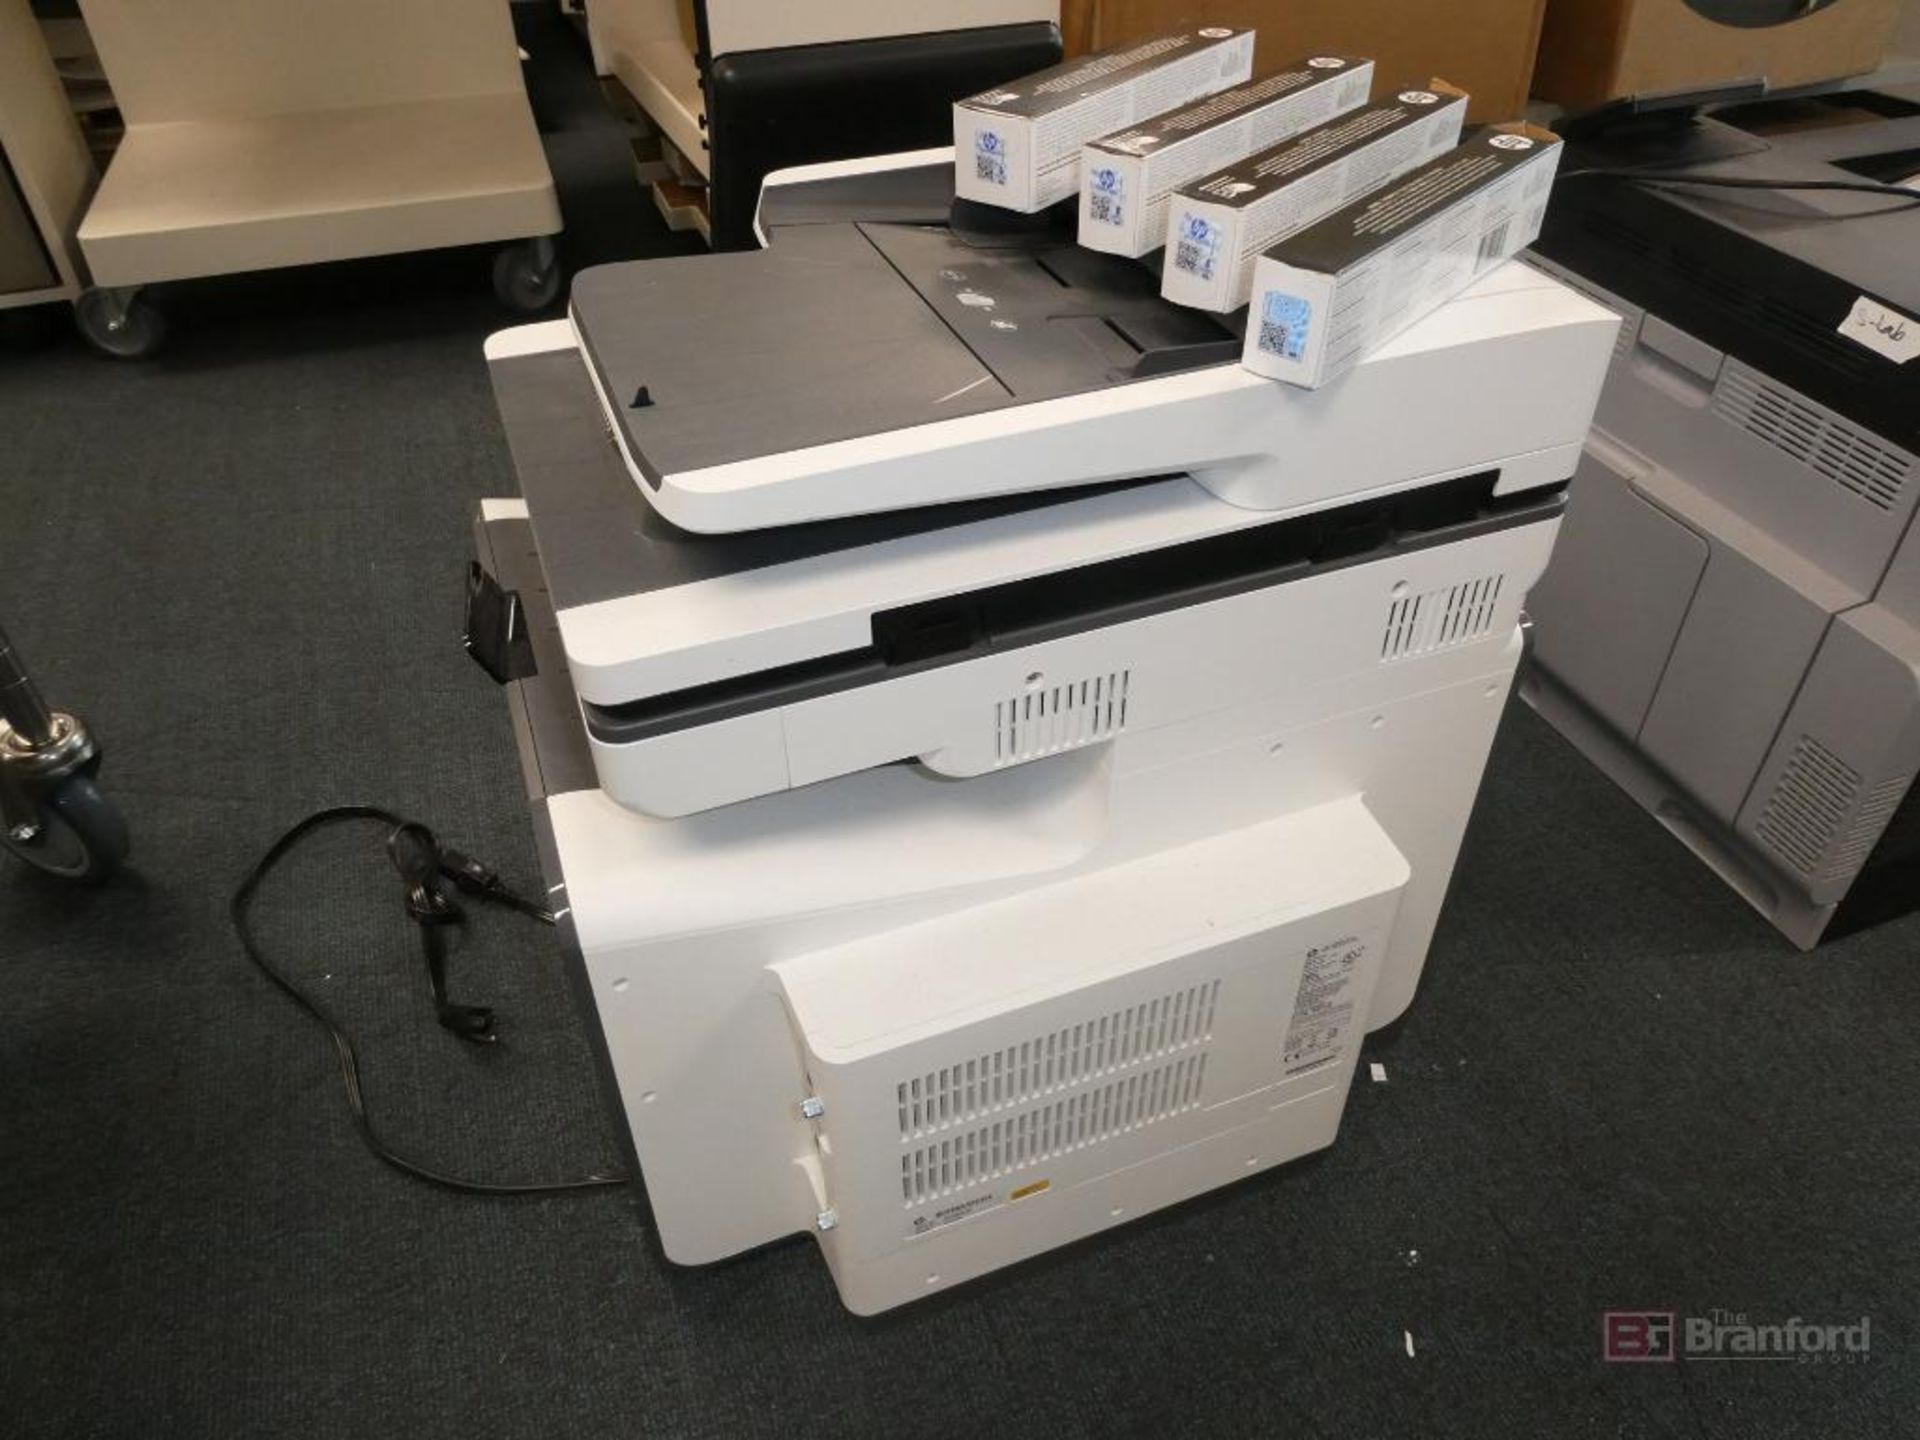 HP PageWide Enterprise MFP586, Color Printer/Scanner/Copy Machine - Image 2 of 4